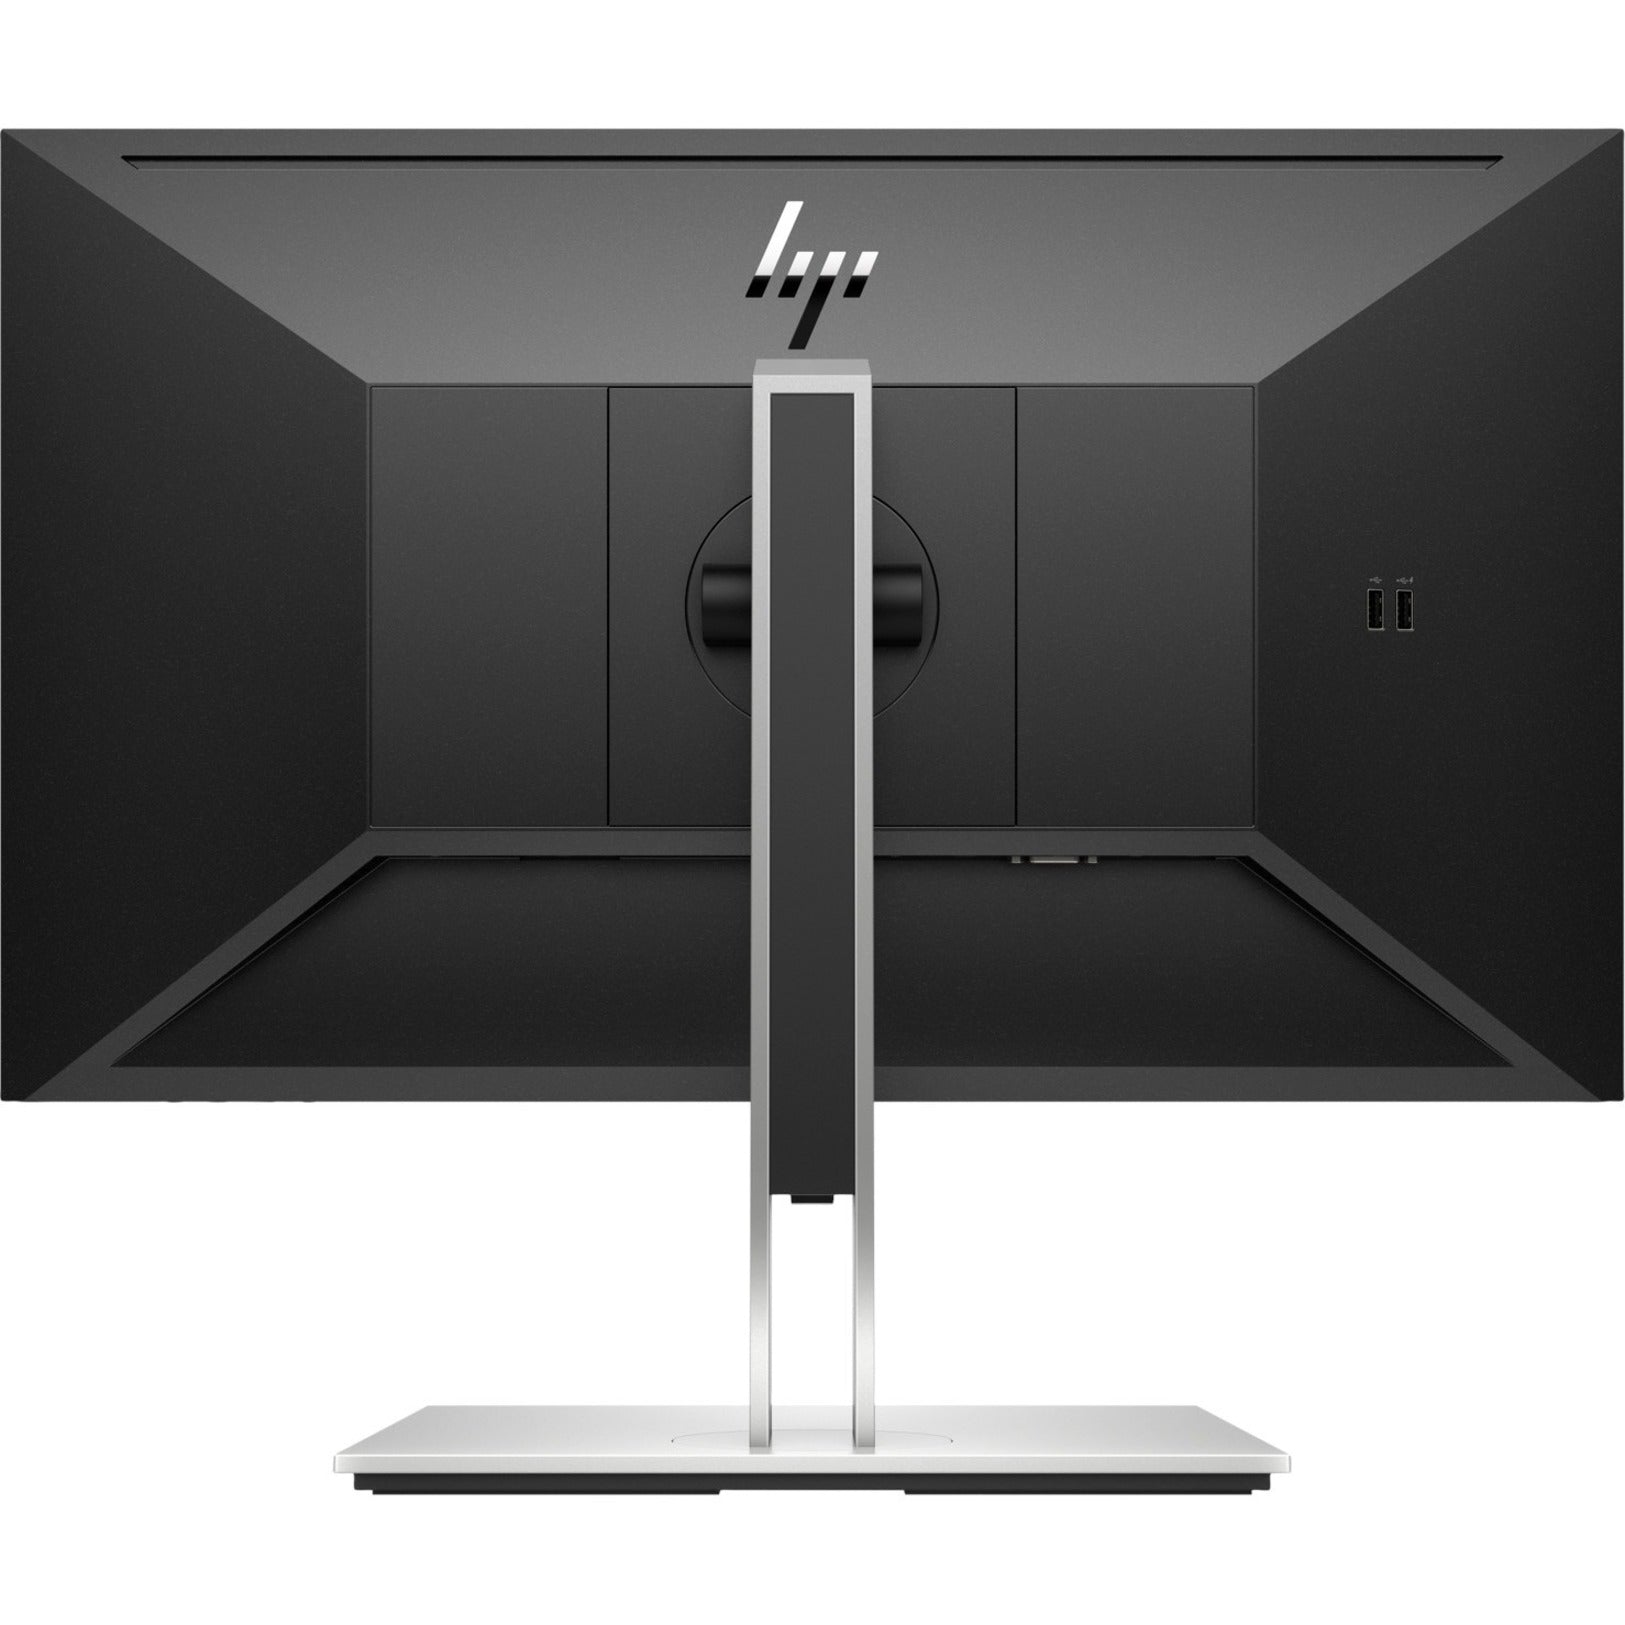 HP E24 G4 23.8" Full HD LCD Monitor - 16:9 - Black (9VF99AA#ABA) Rear image